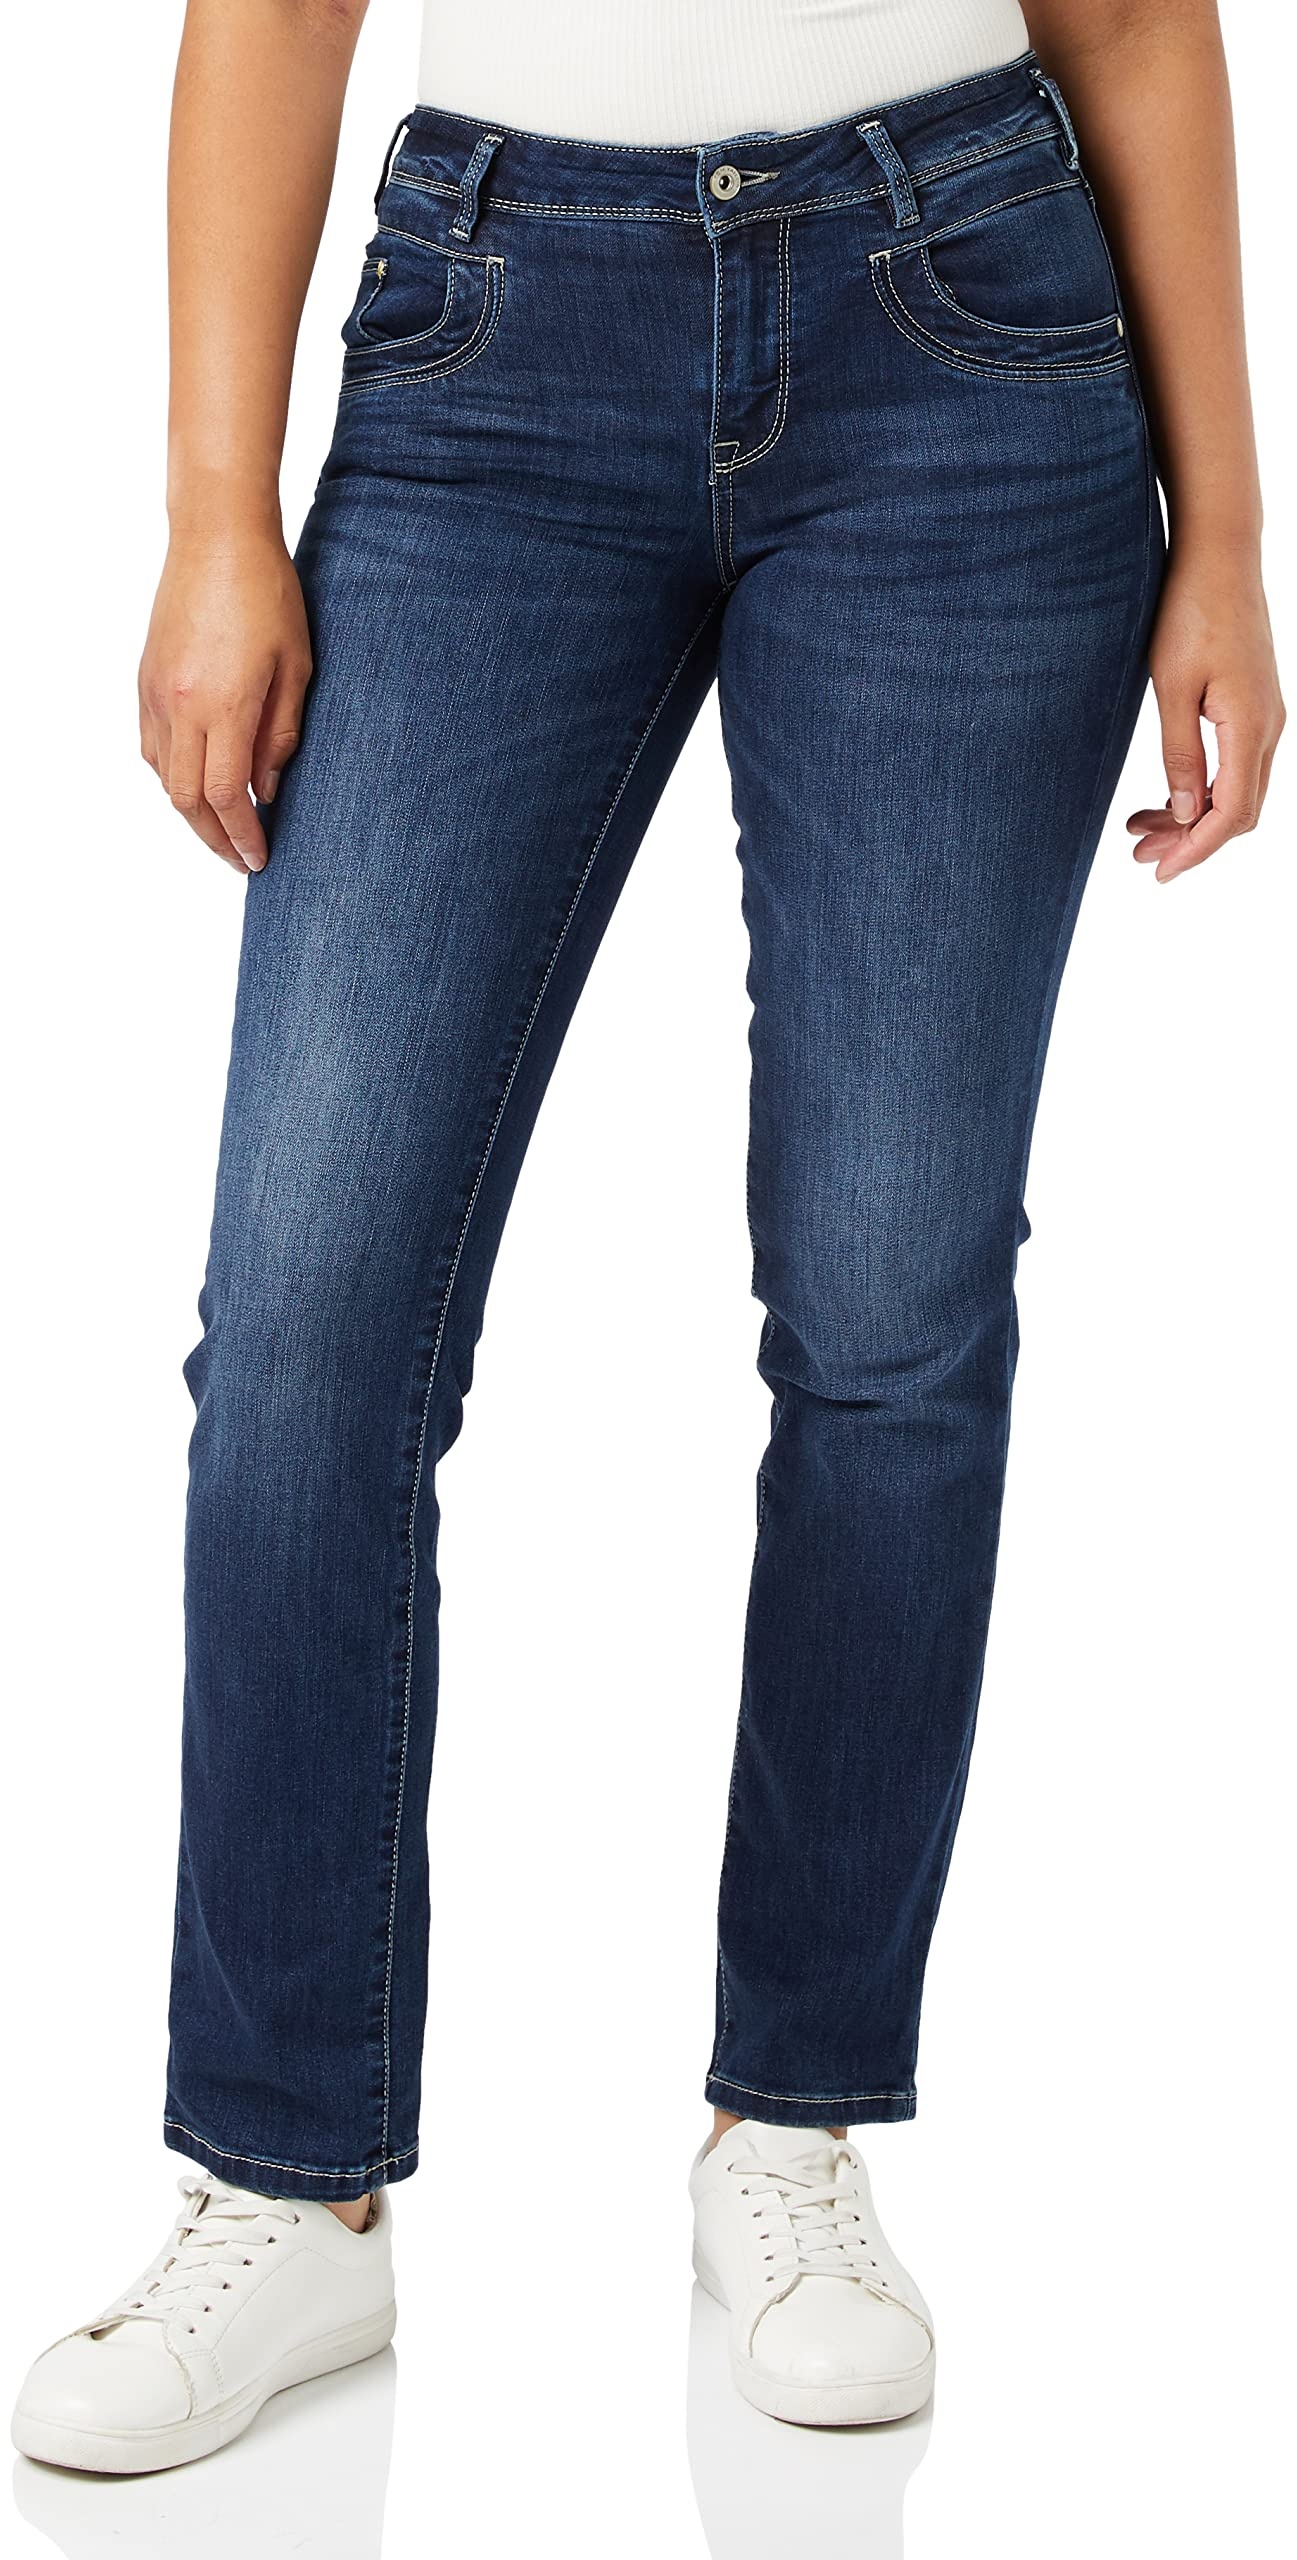 TOM TAILOR Damen 1008146 Alexa Straight Jeans, 10282 - Dark Stone Wash Denim, 34W / 32L EU